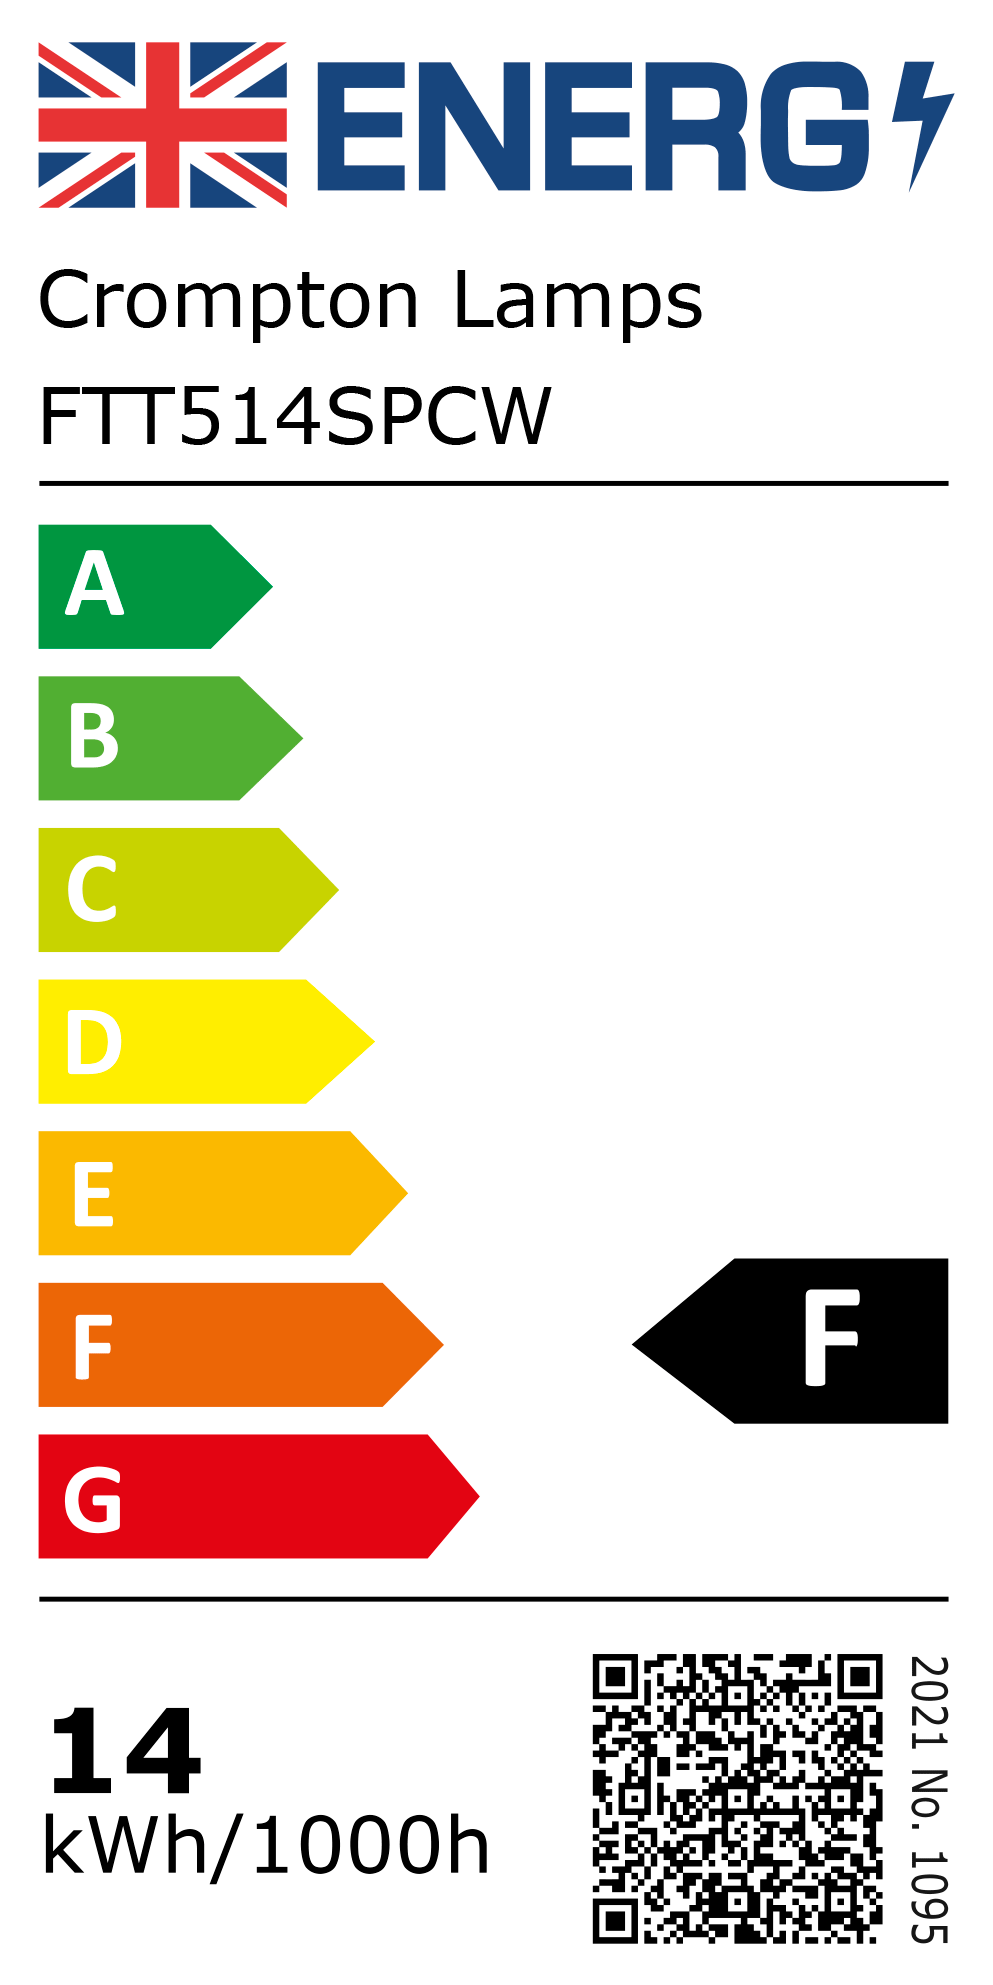 New 2021 Energy Rating Label: Stock Code FTT514SPCW